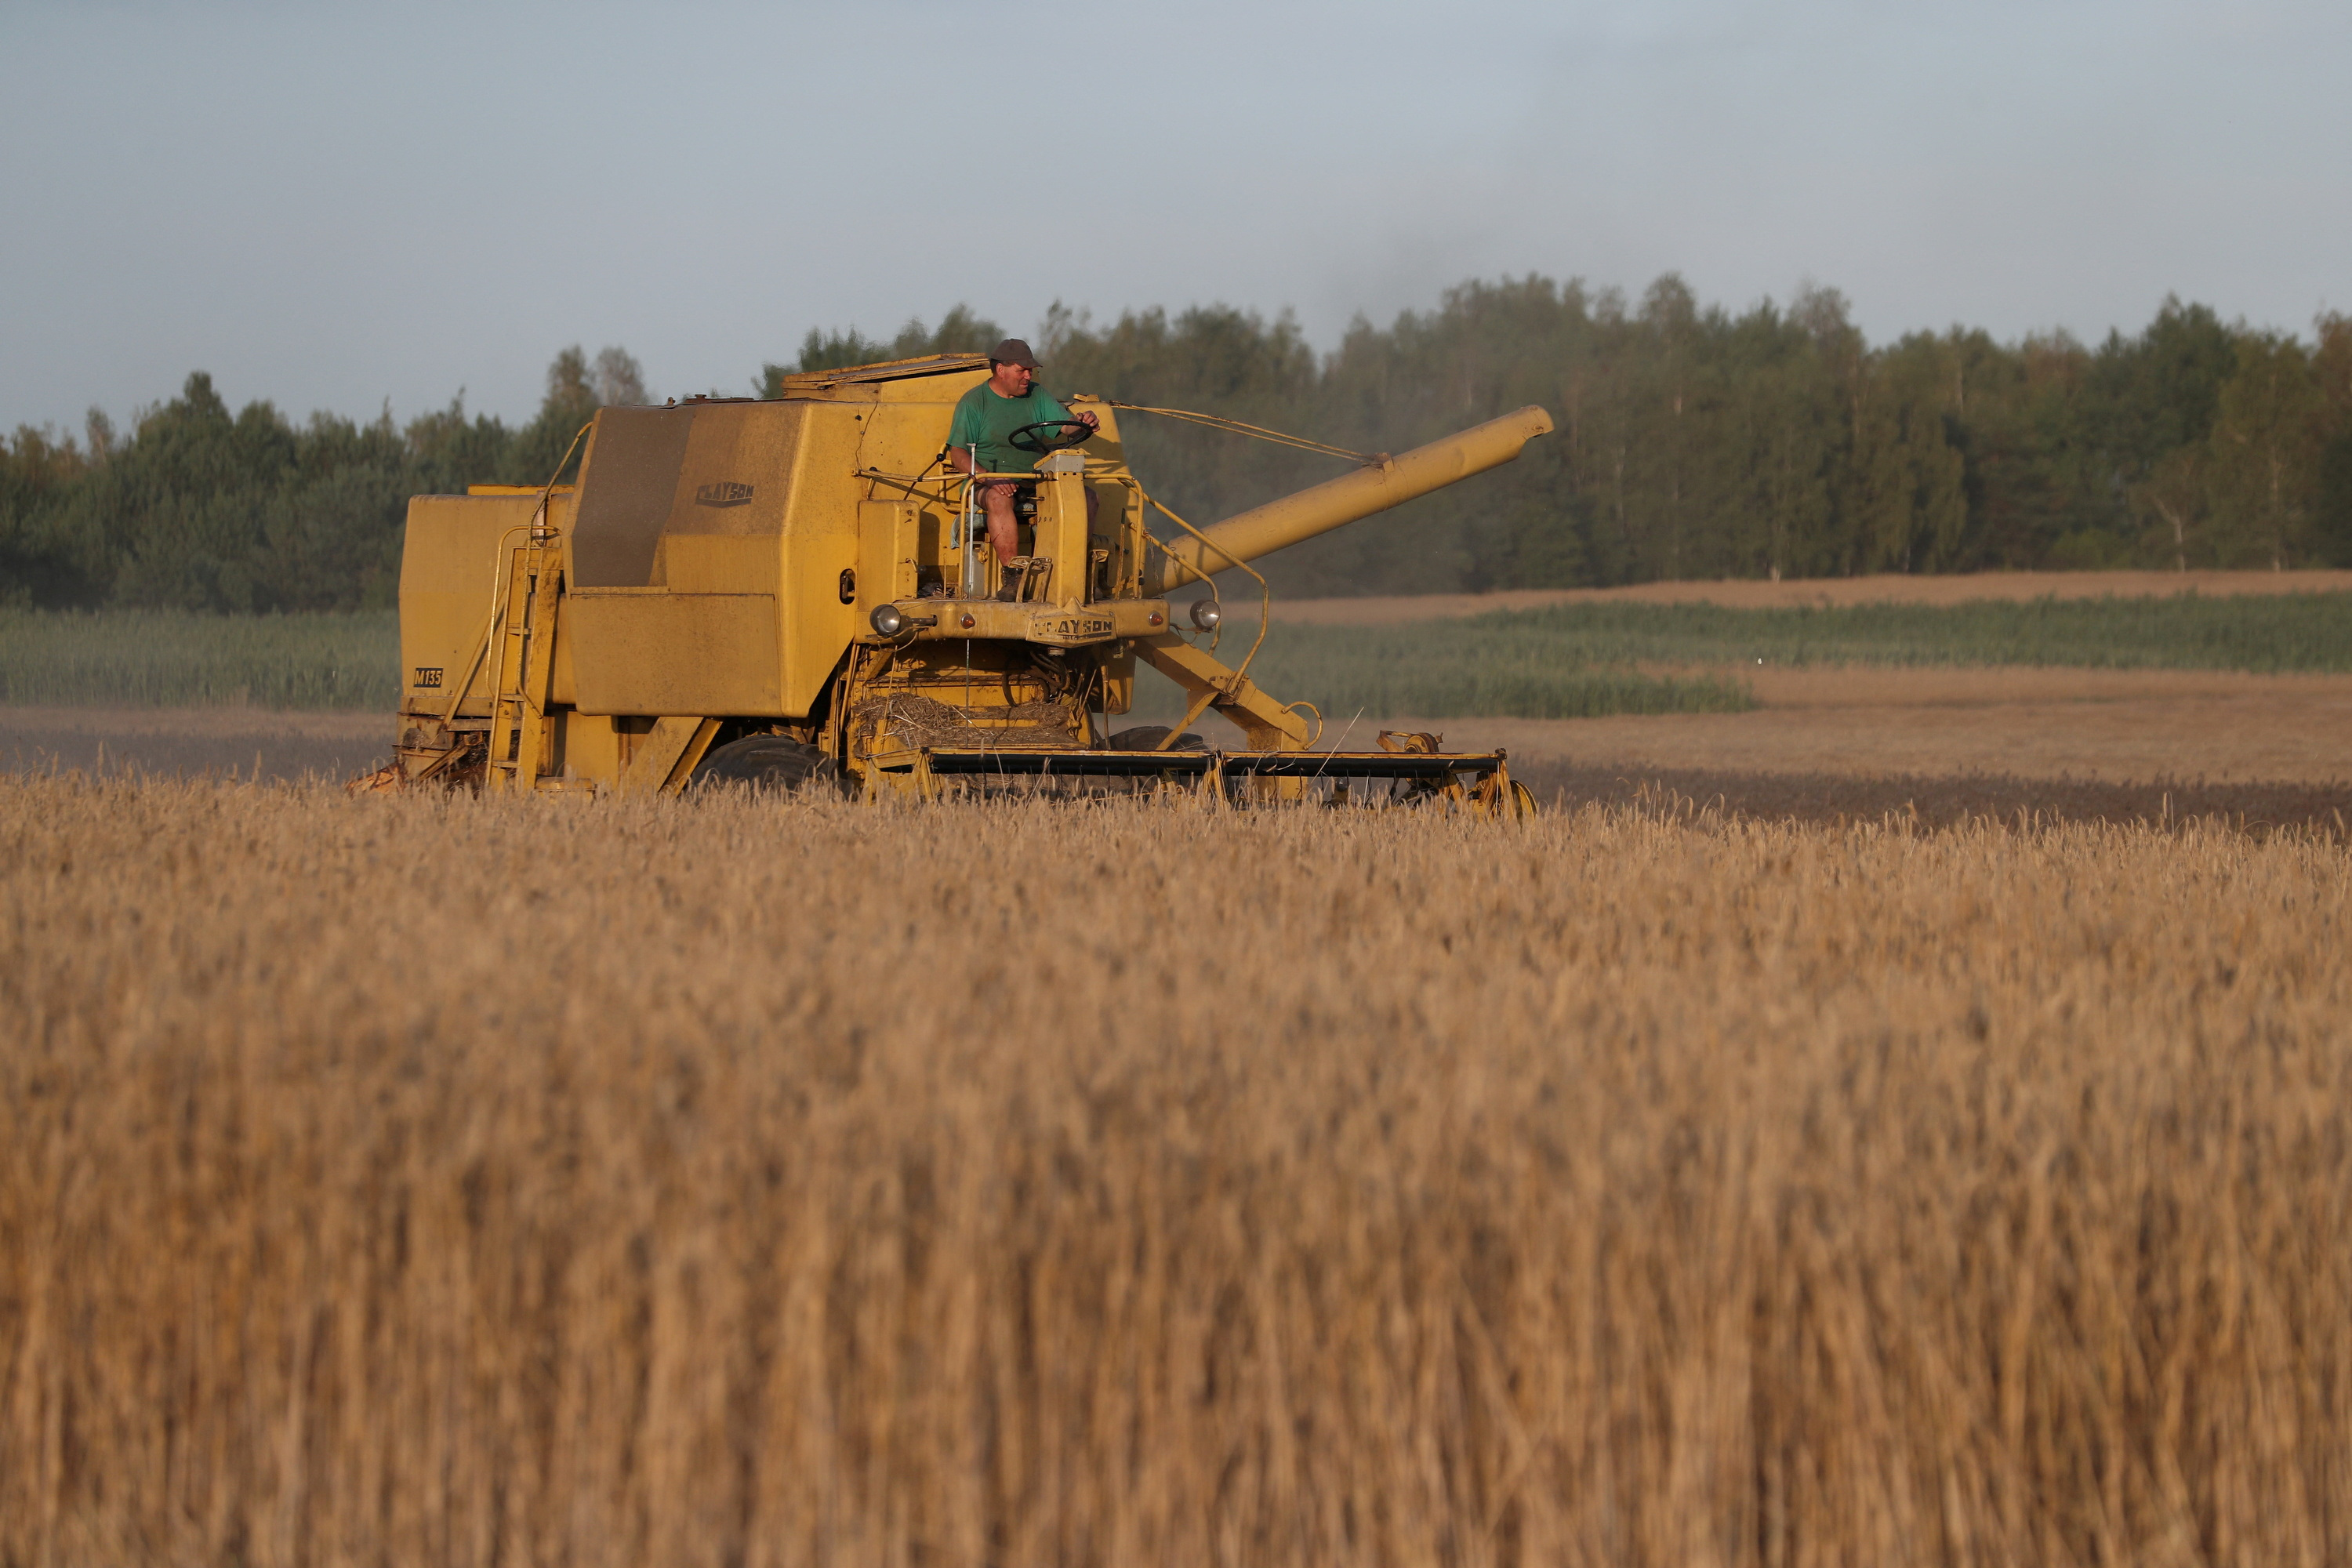 A combine harvester reaps grain at a field near Popowo Koscielne